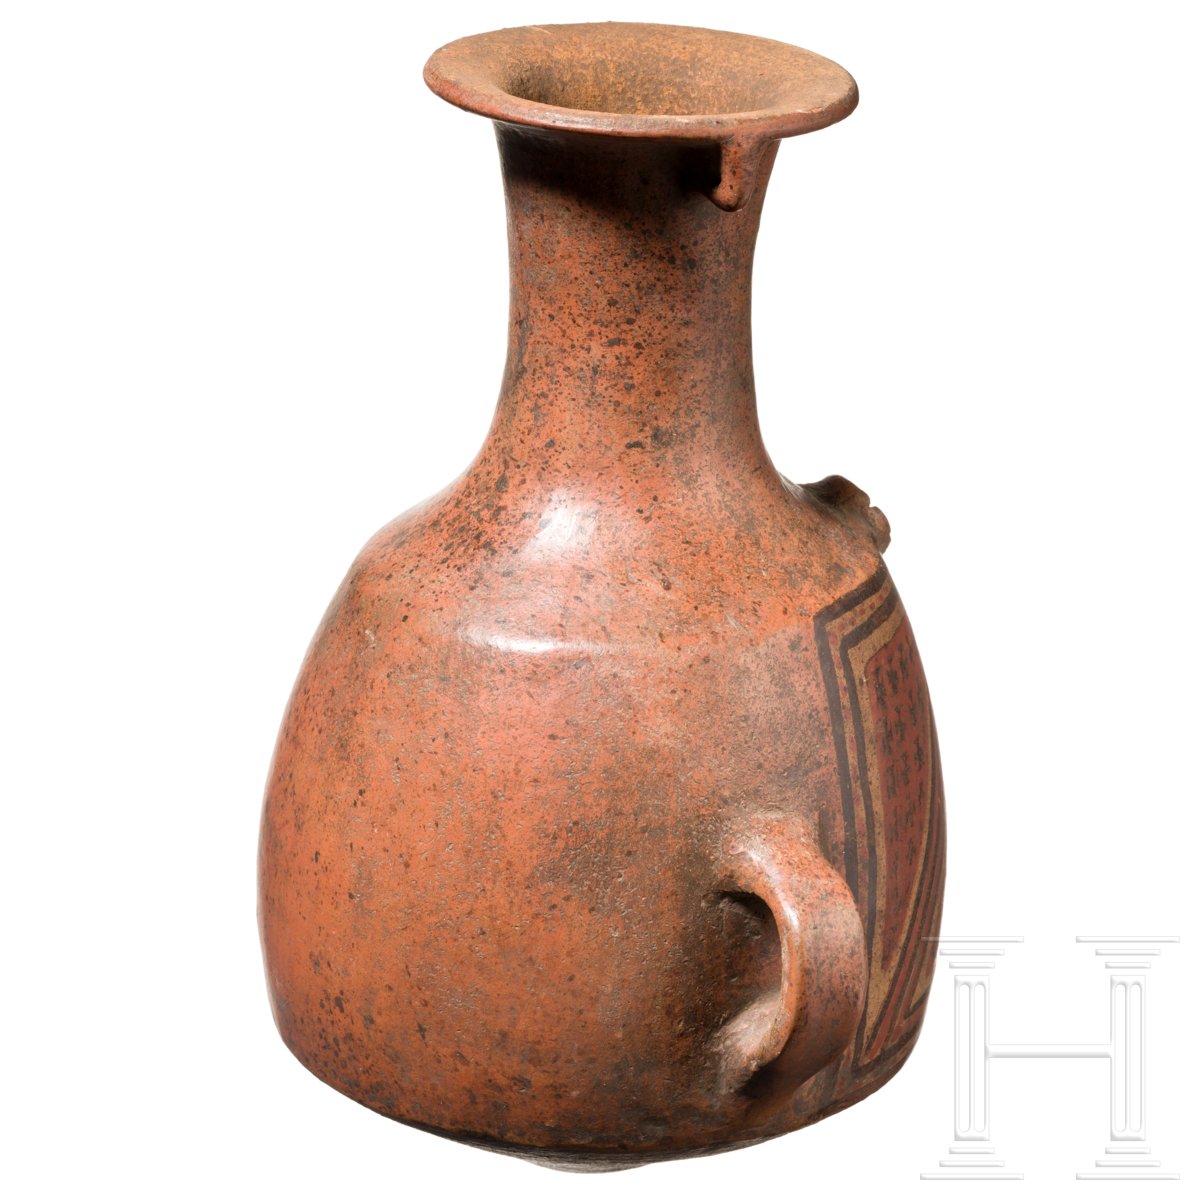 Bauchige Ticachurana-Flasche, Inka, Peru, 15./16. Jhdt. - Image 3 of 3